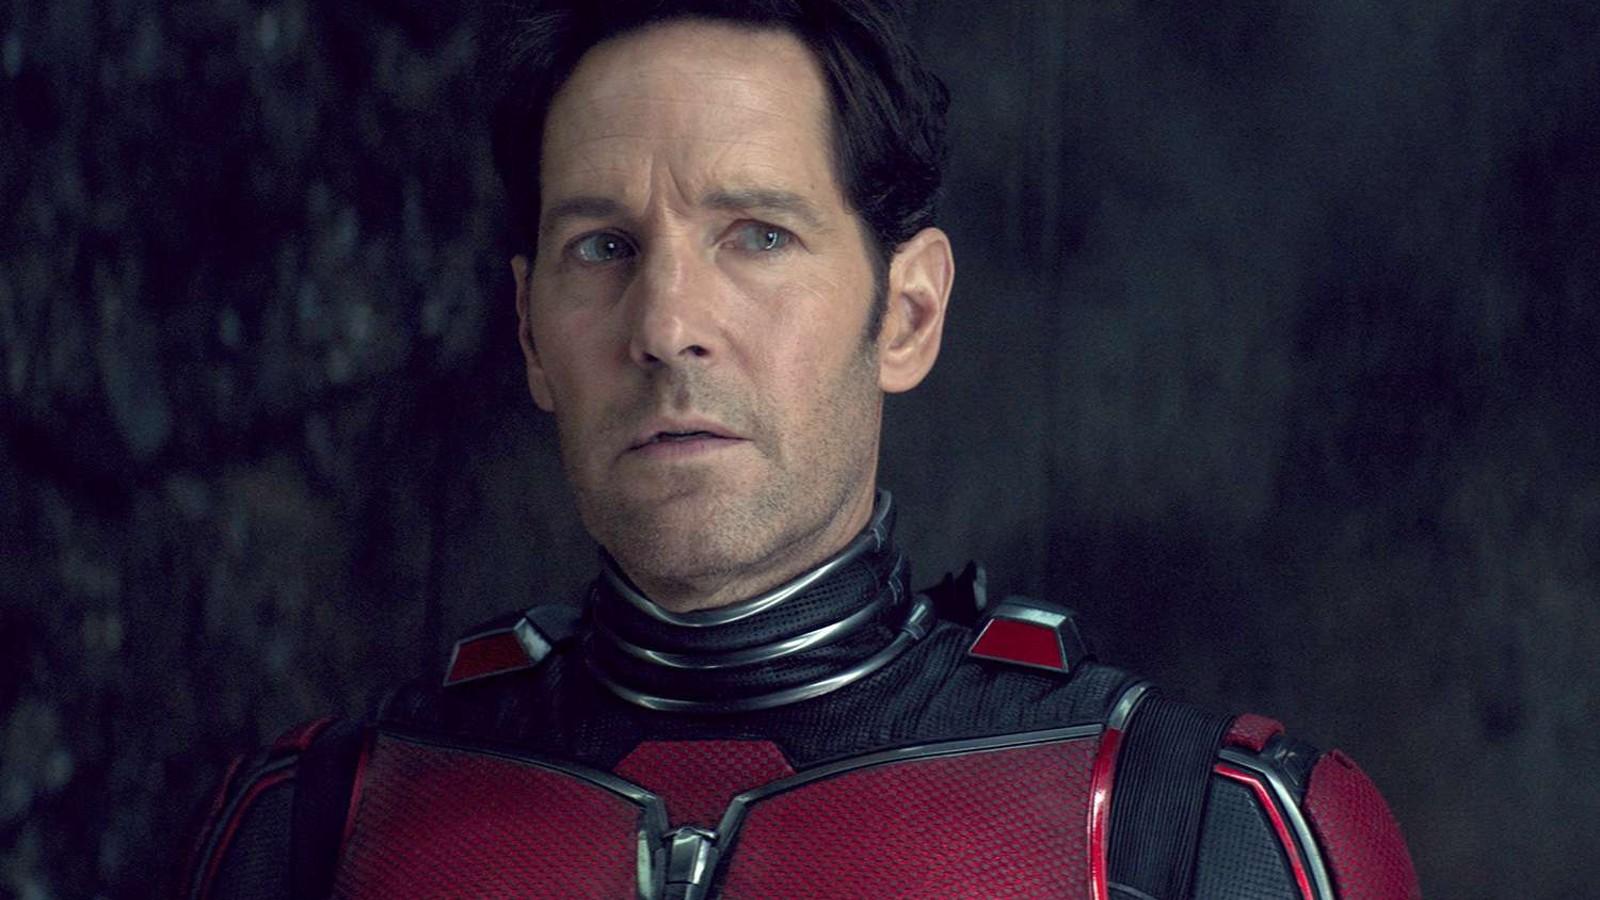 Scott Lang looking pensive in Ant-Man 3.